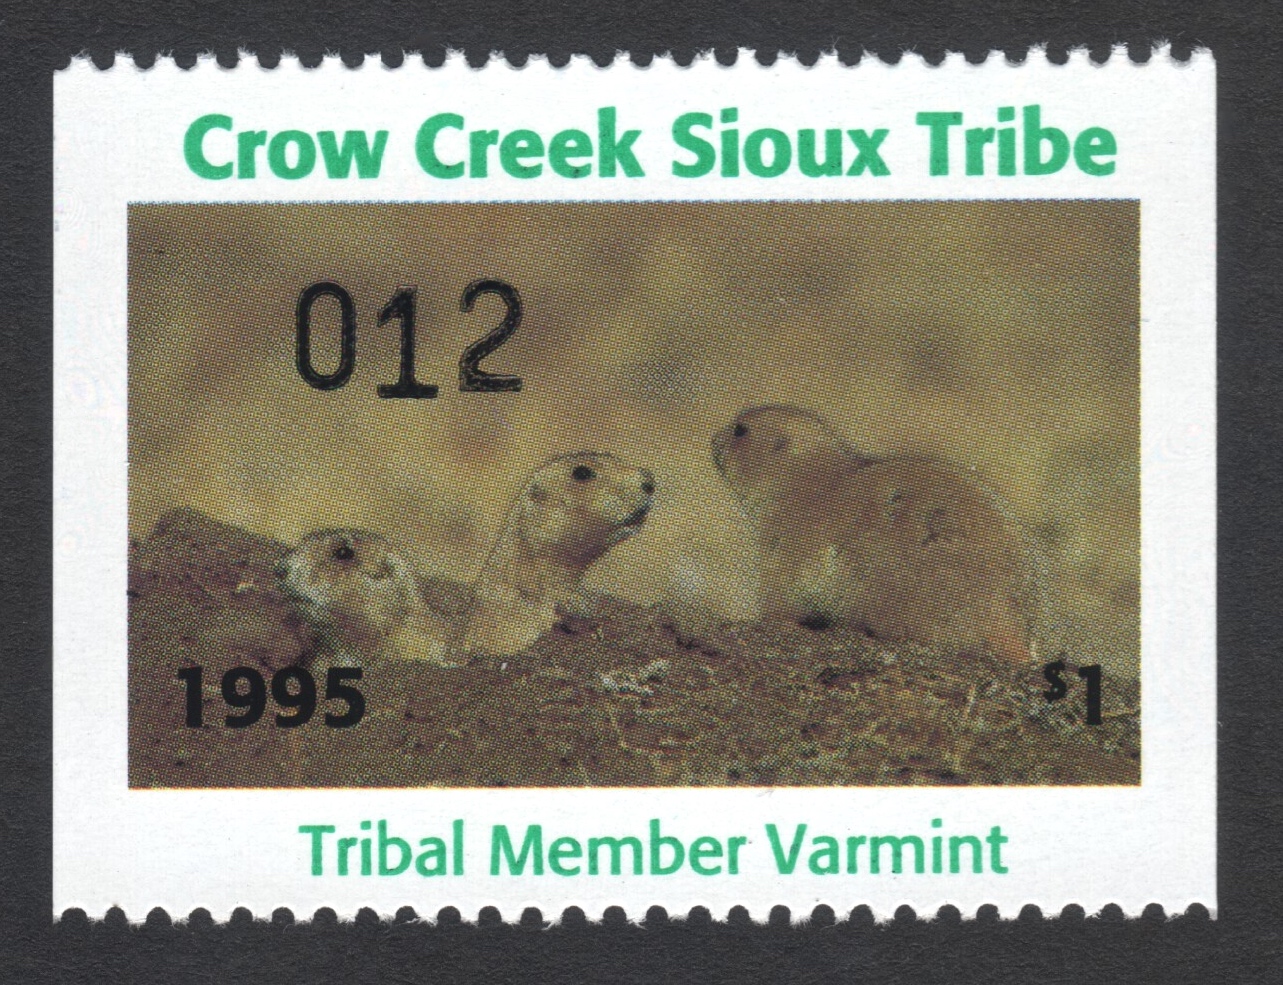 1995 Crow Creek Tribal Member Varmint